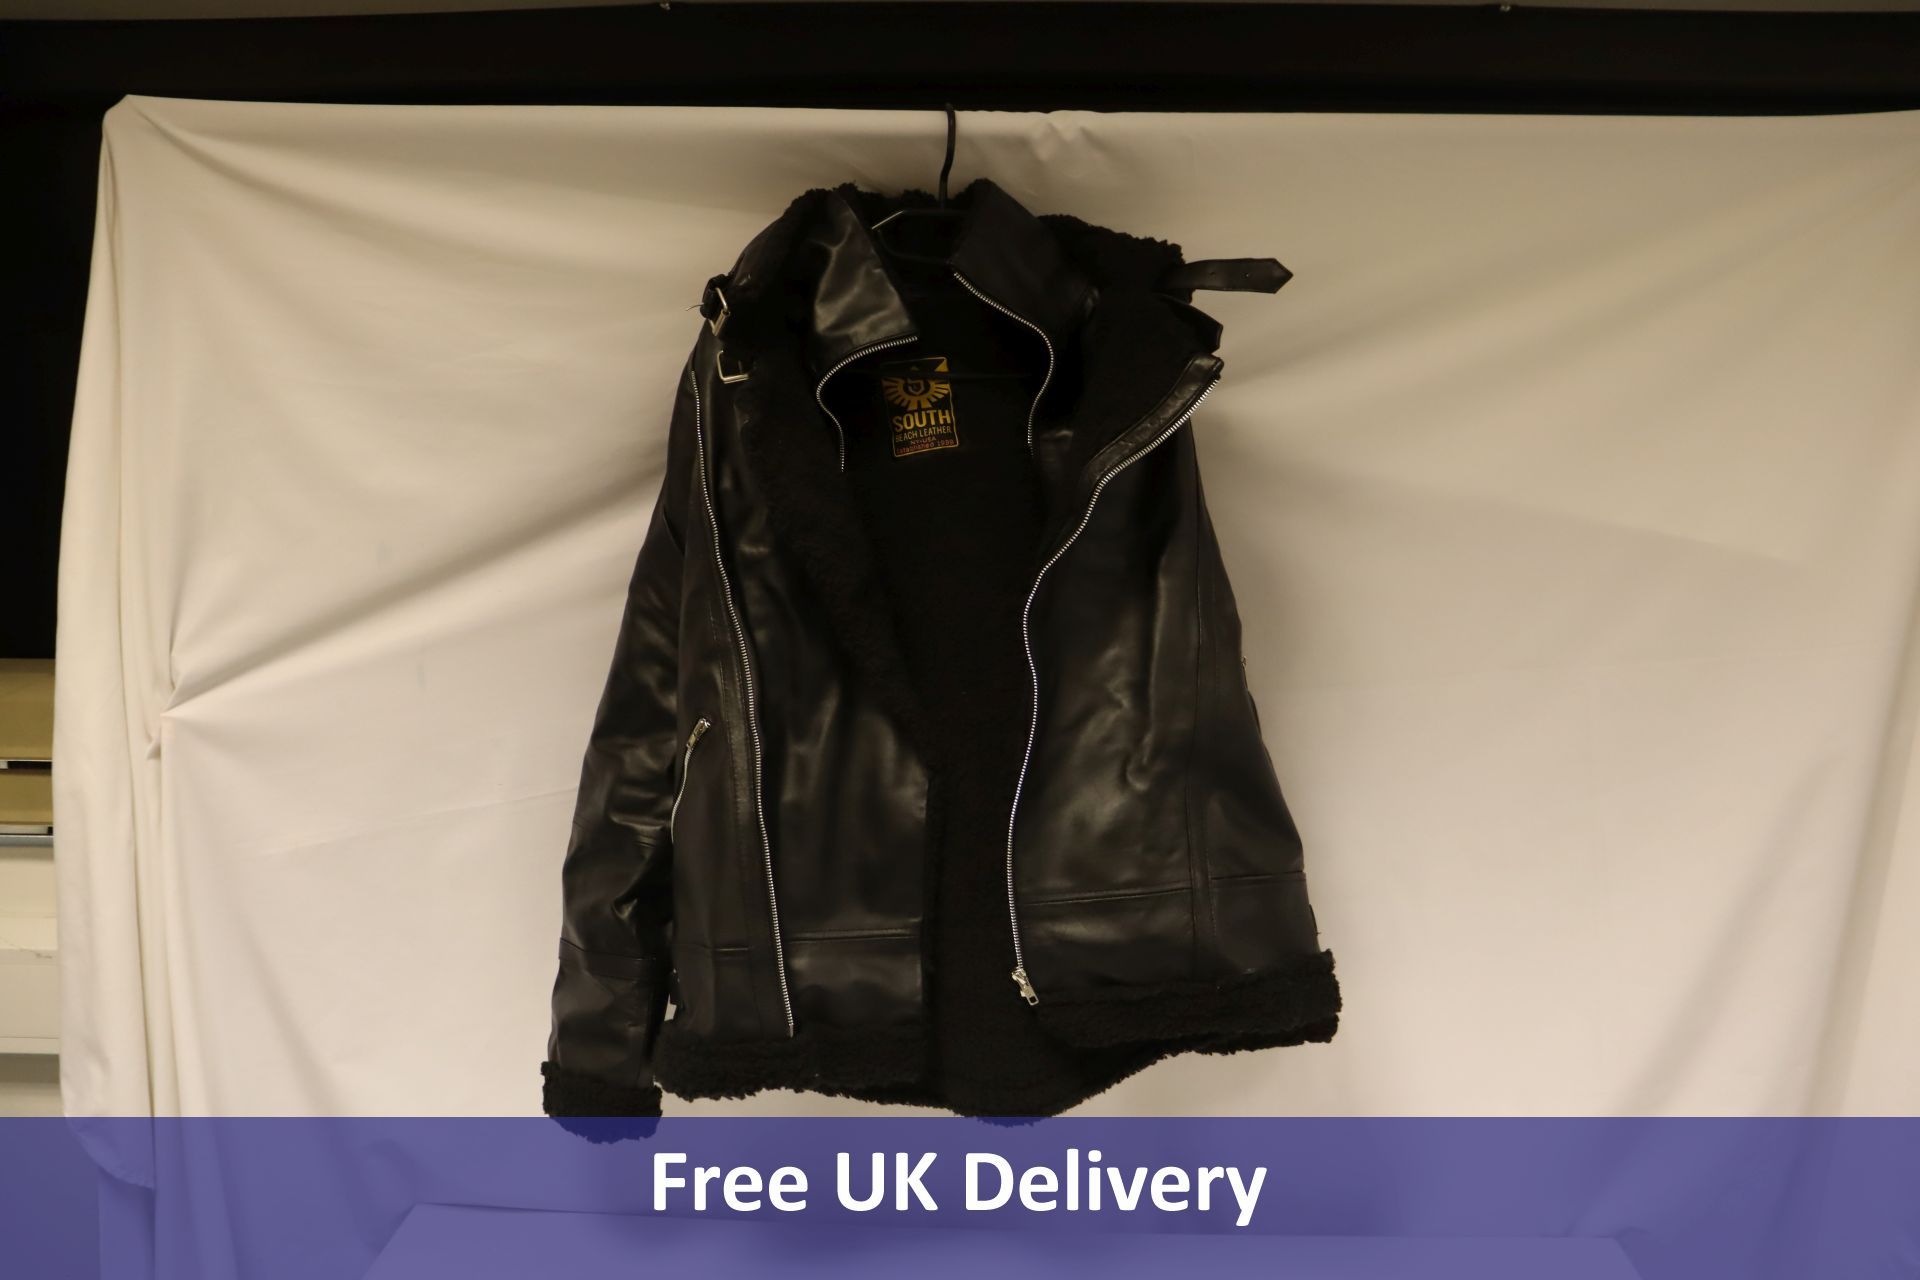 South Beach Leather Bomber Jacket, Black, XL